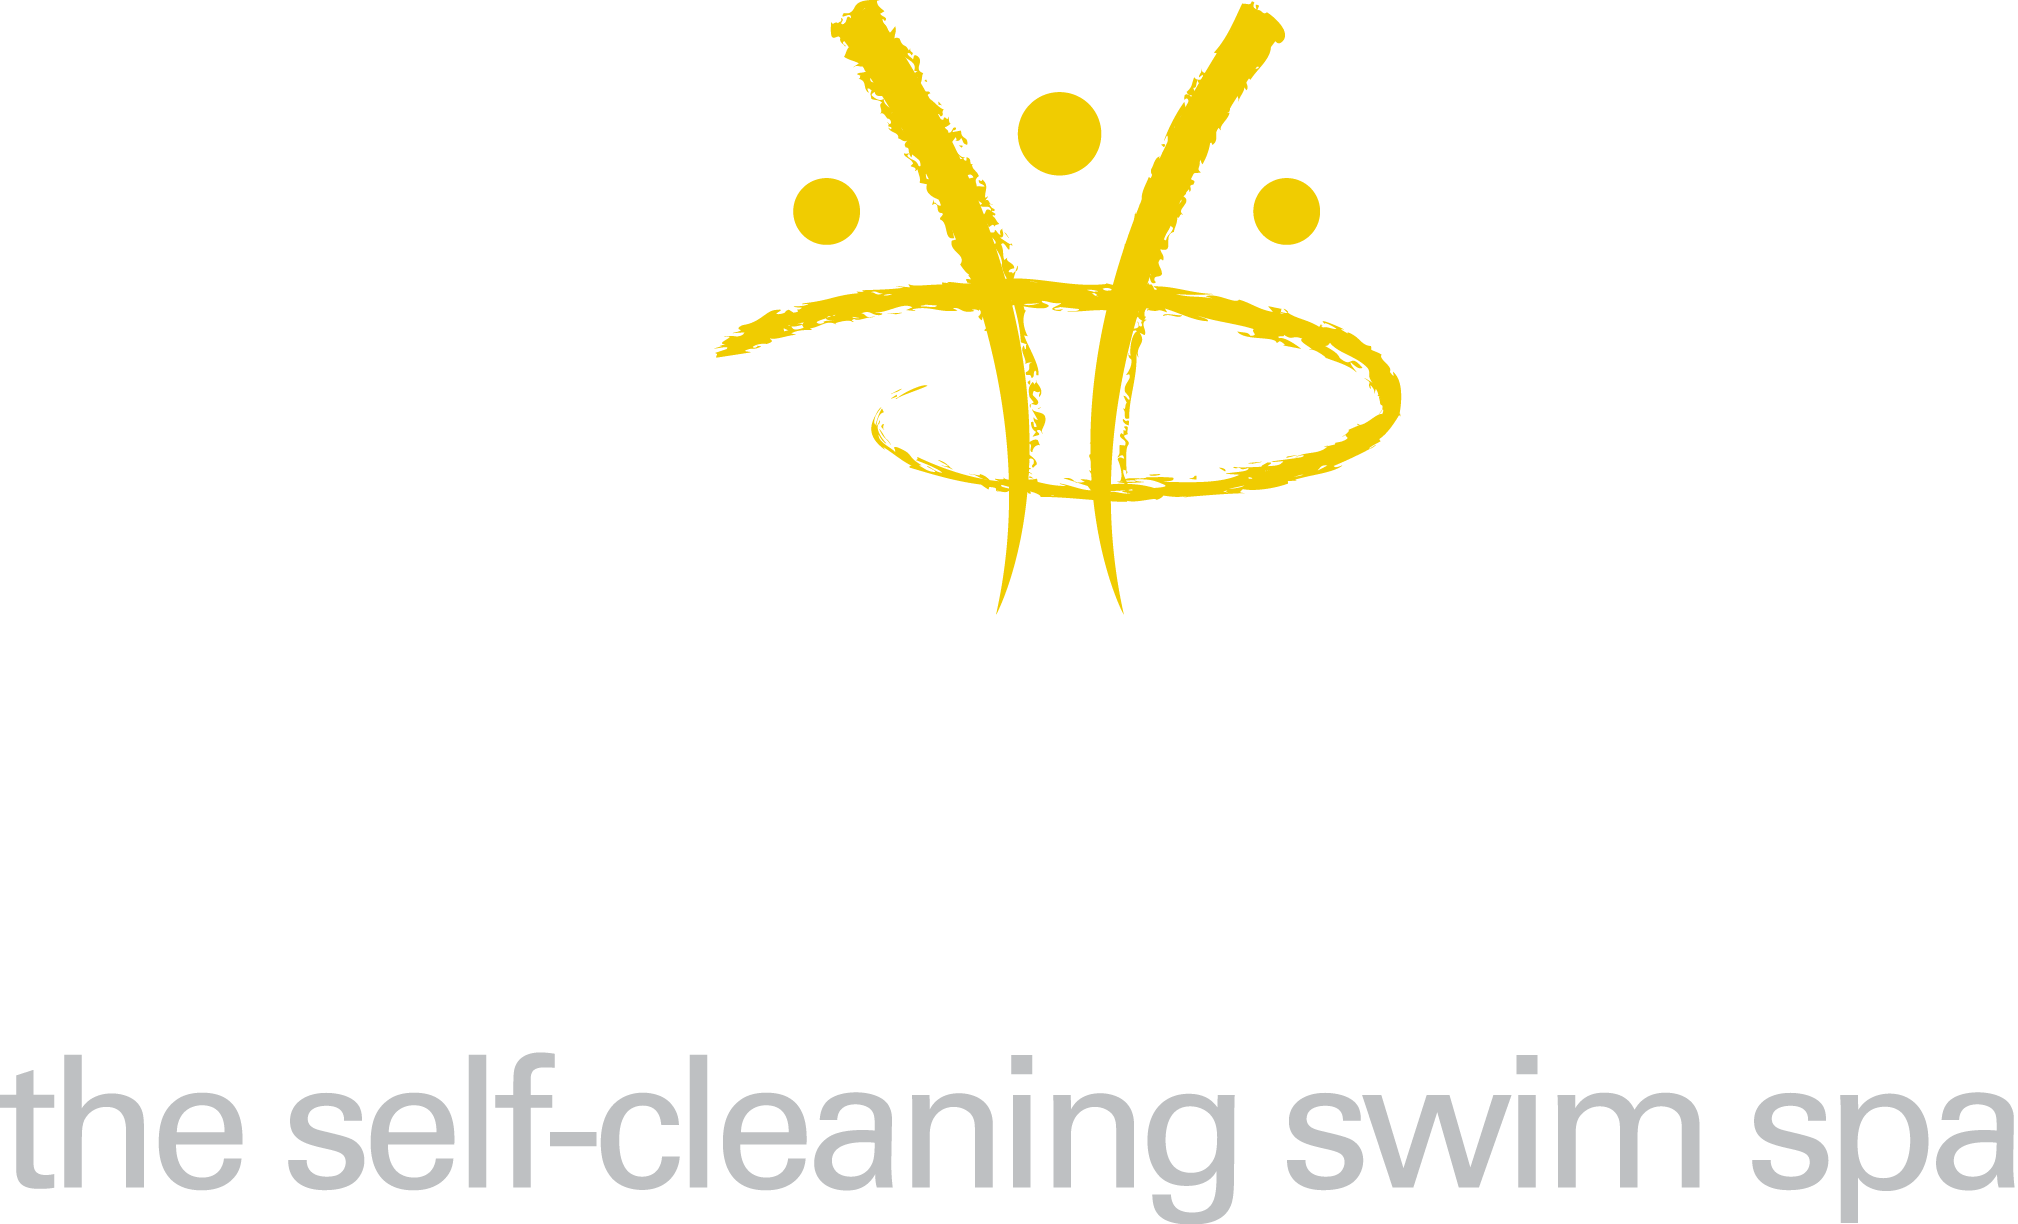 Hydropool Swim Spas